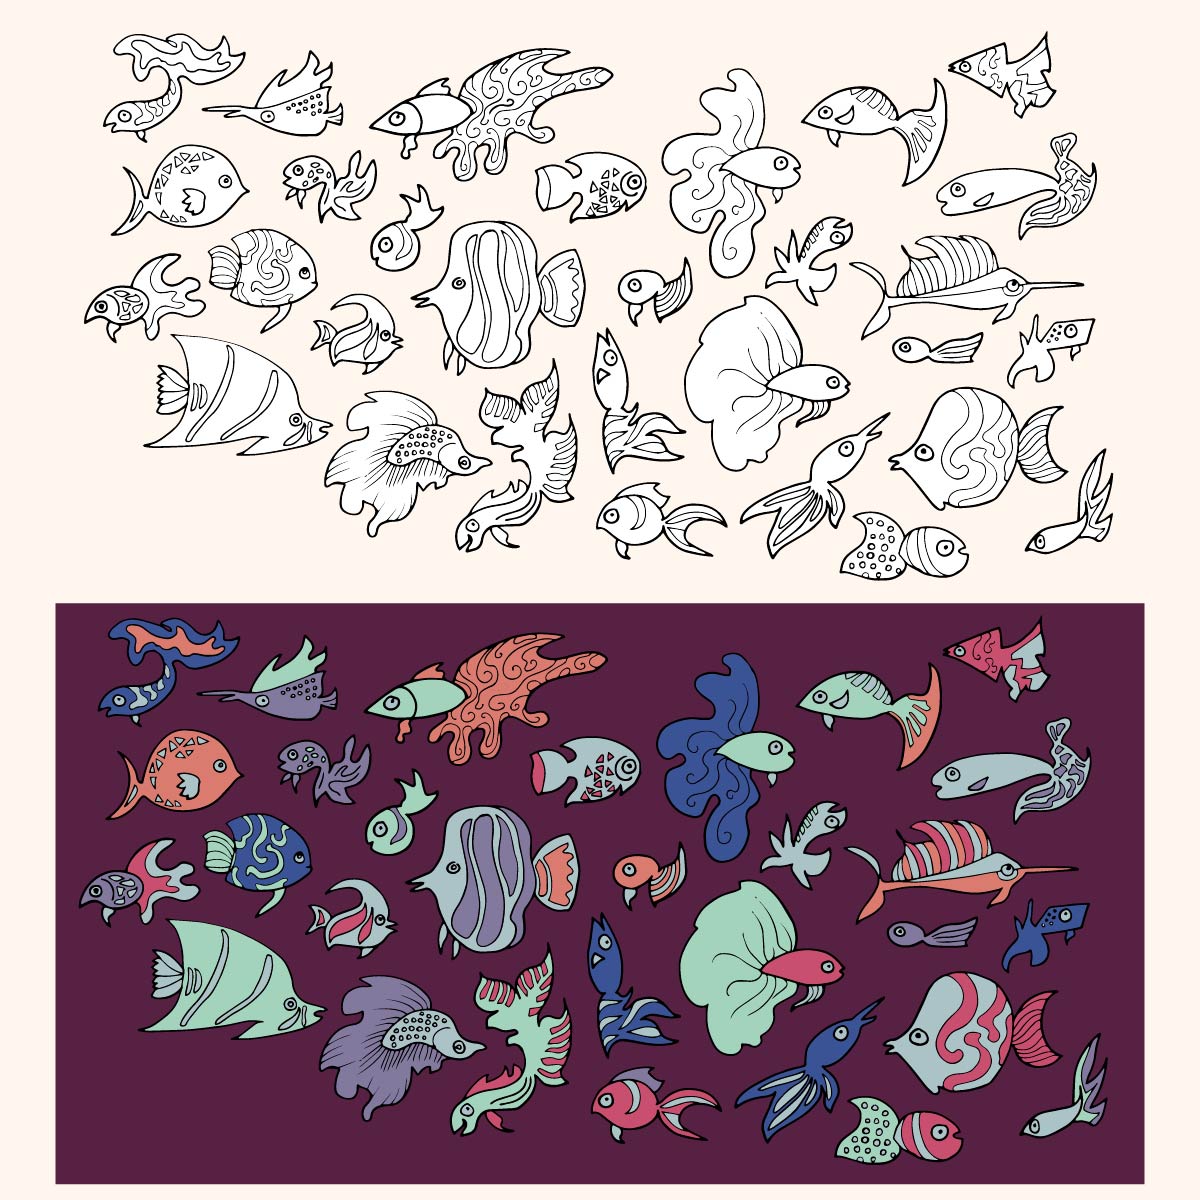 Sketchbook character design: fishes